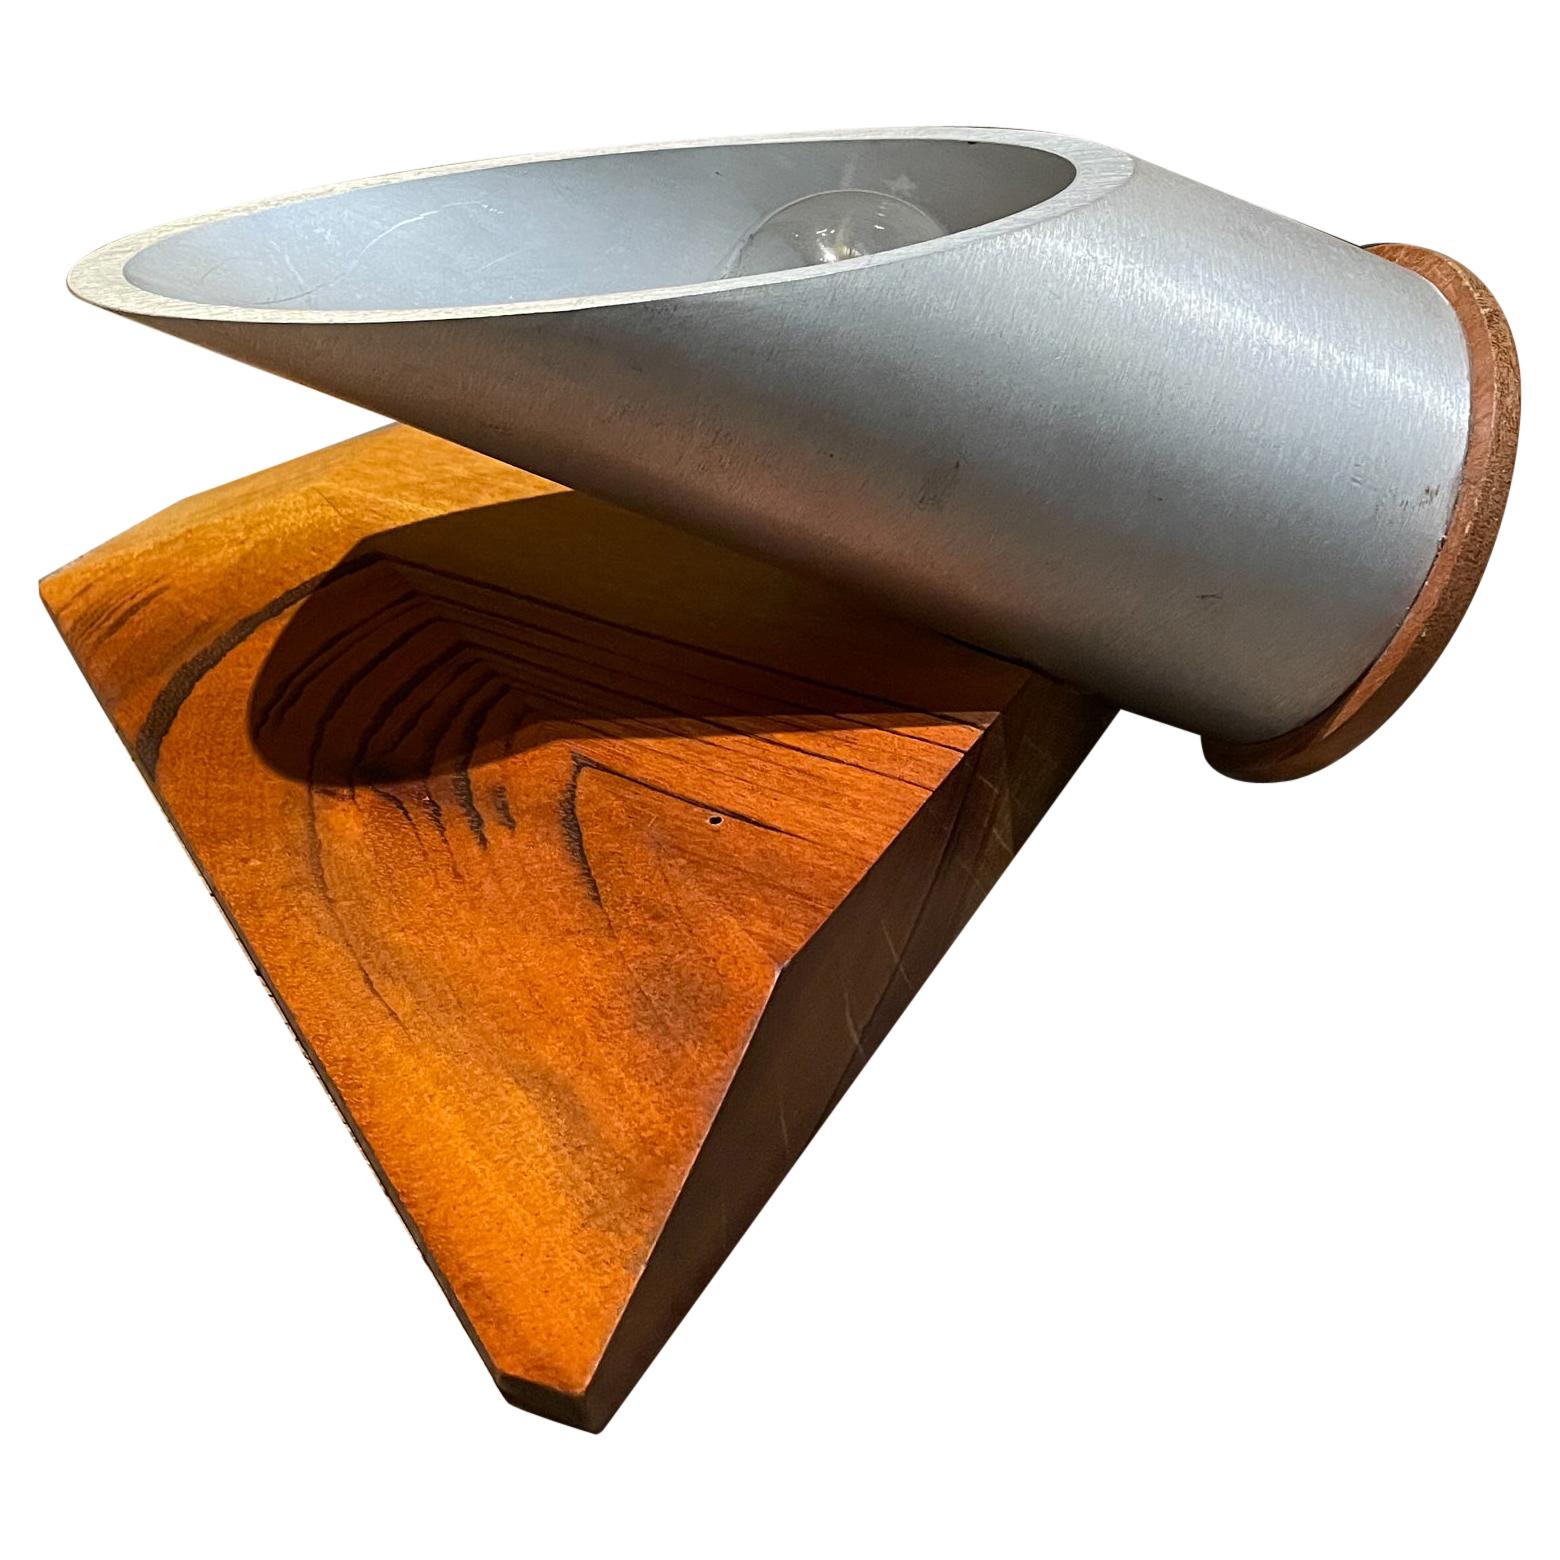 Custom Art Studio Design Tube Table Lamp Angled Mount on Refined Wood Block Base